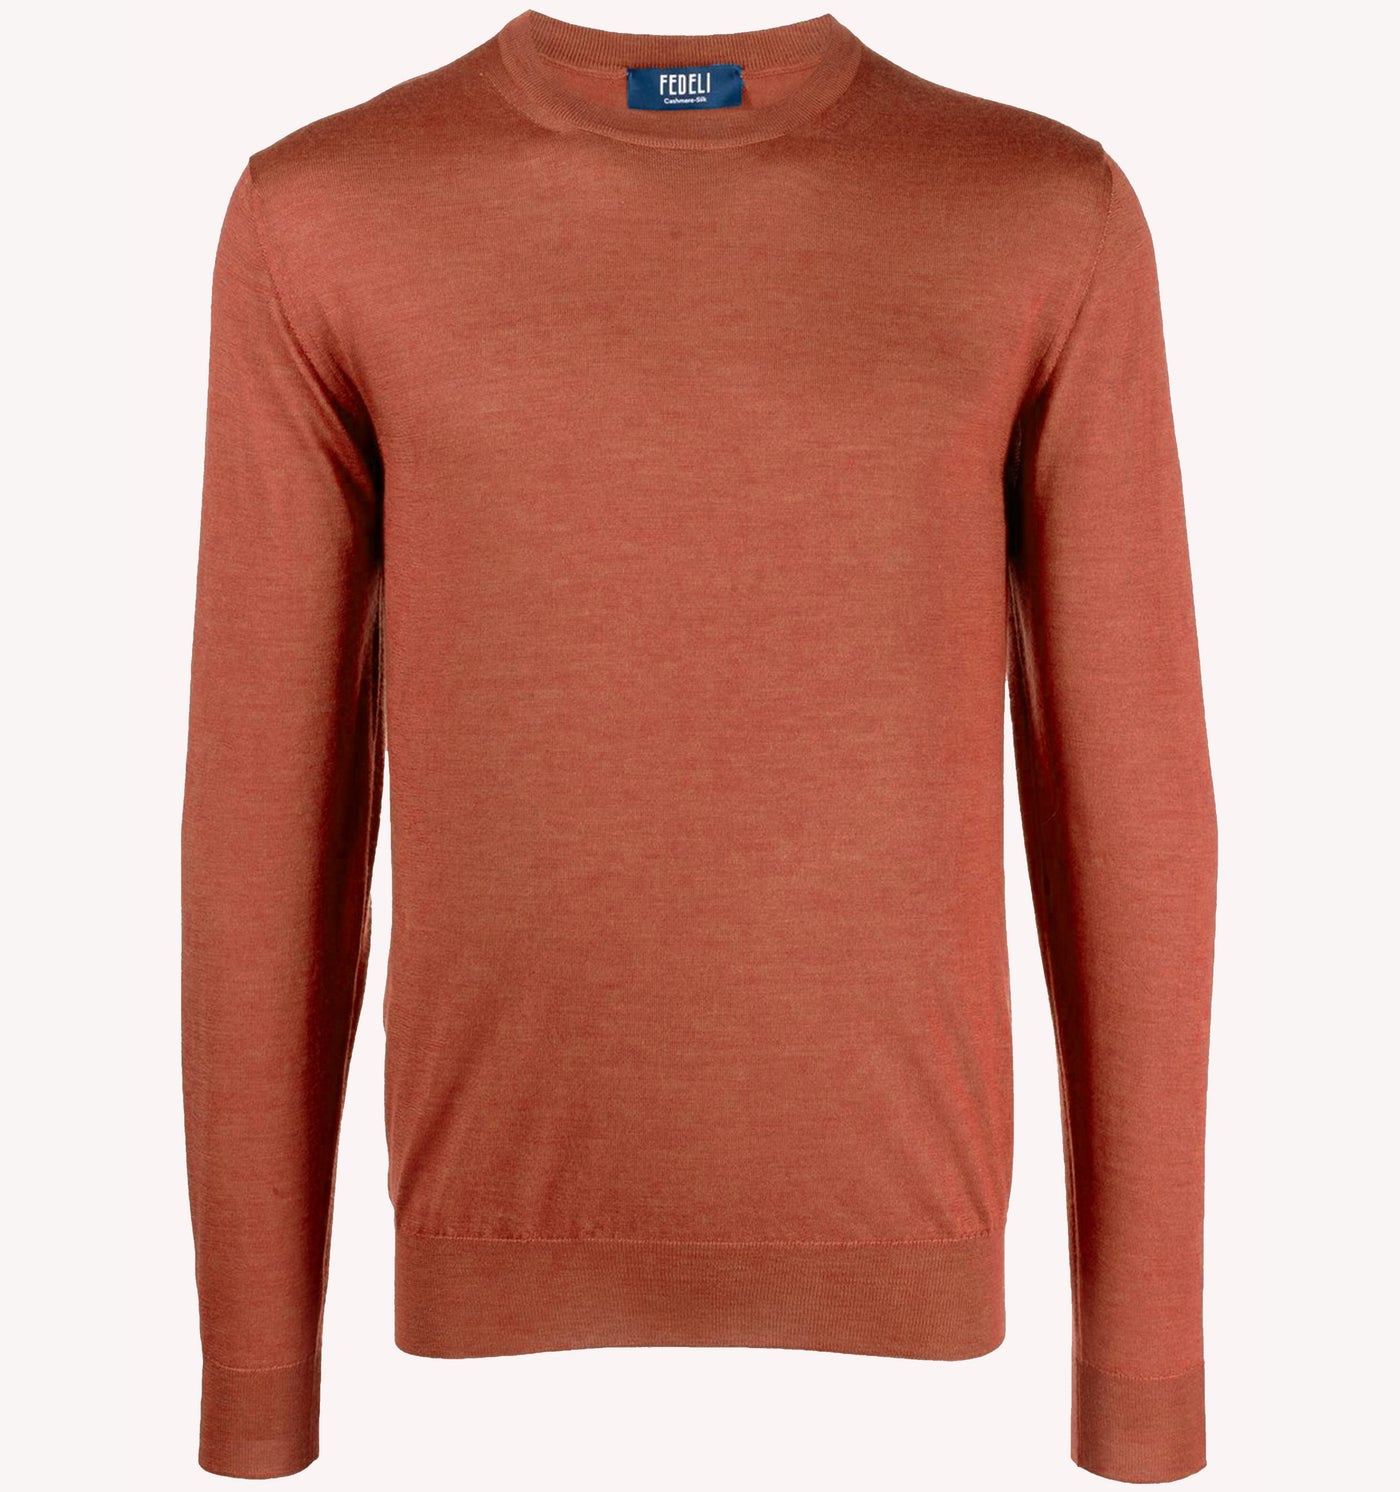 Fedeli Sweater in Rust